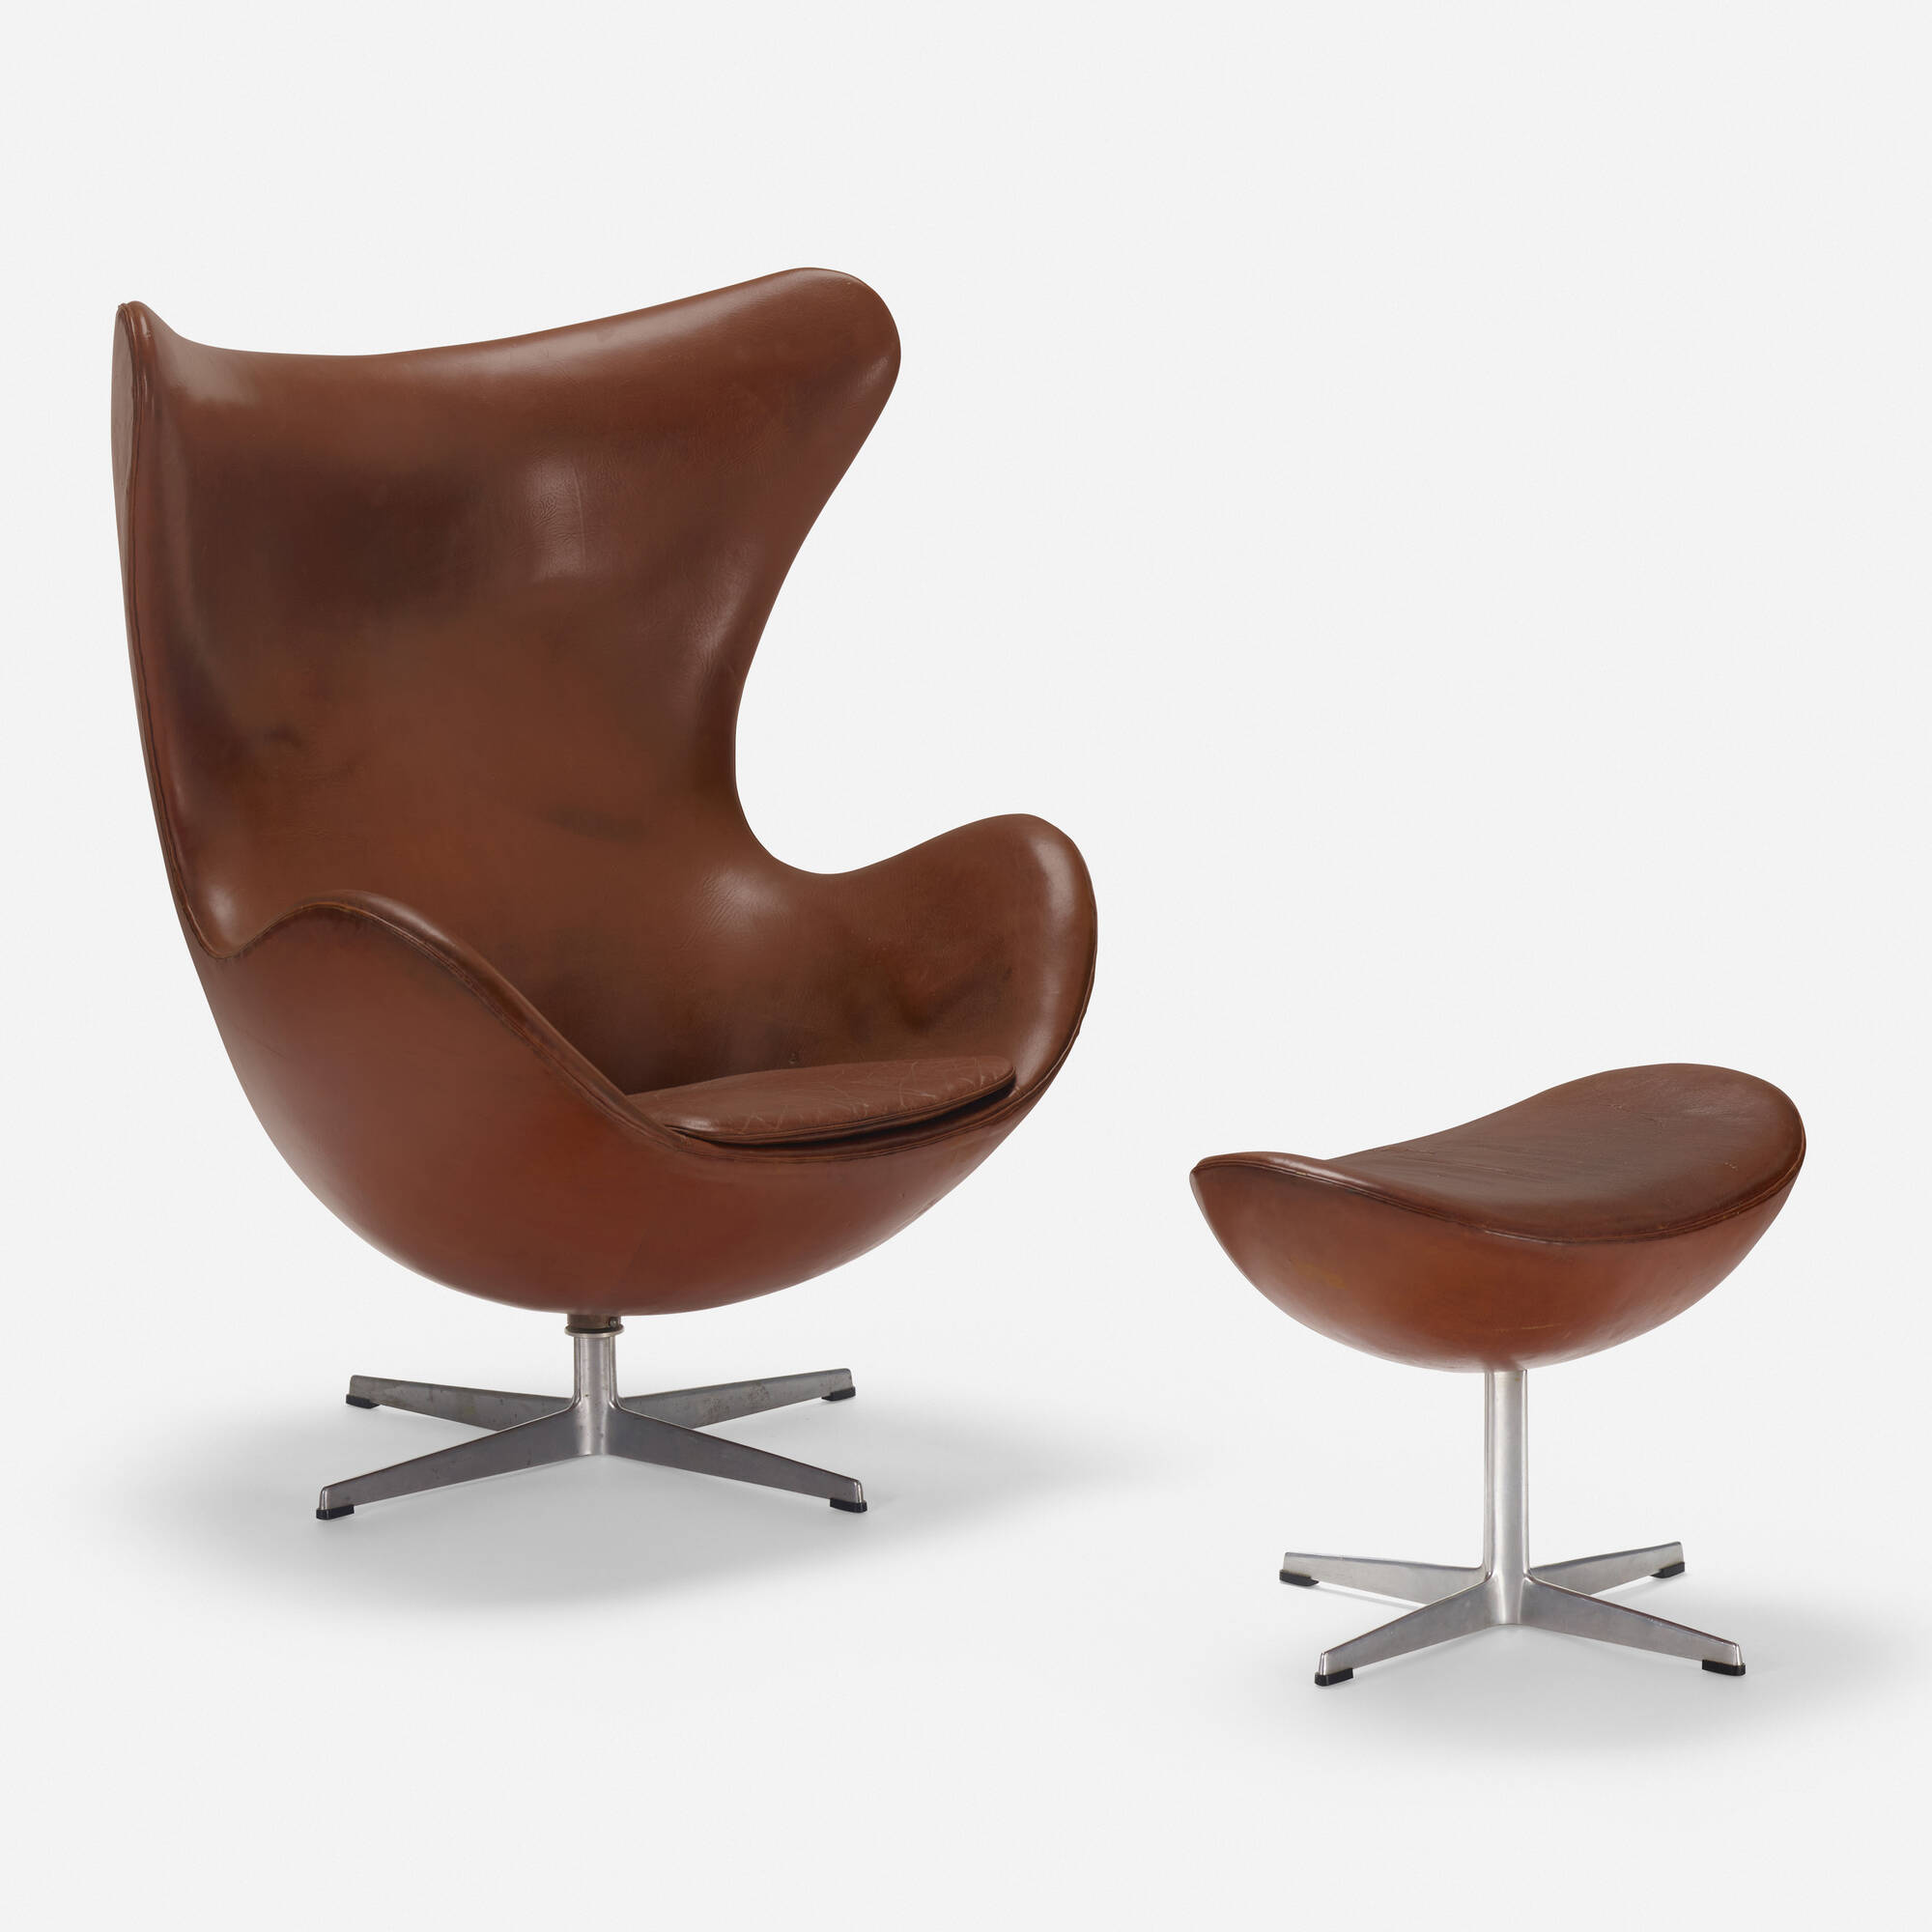 186: ARNE JACOBSEN, Egg chair and ottoman < Design, 18 April 2023 